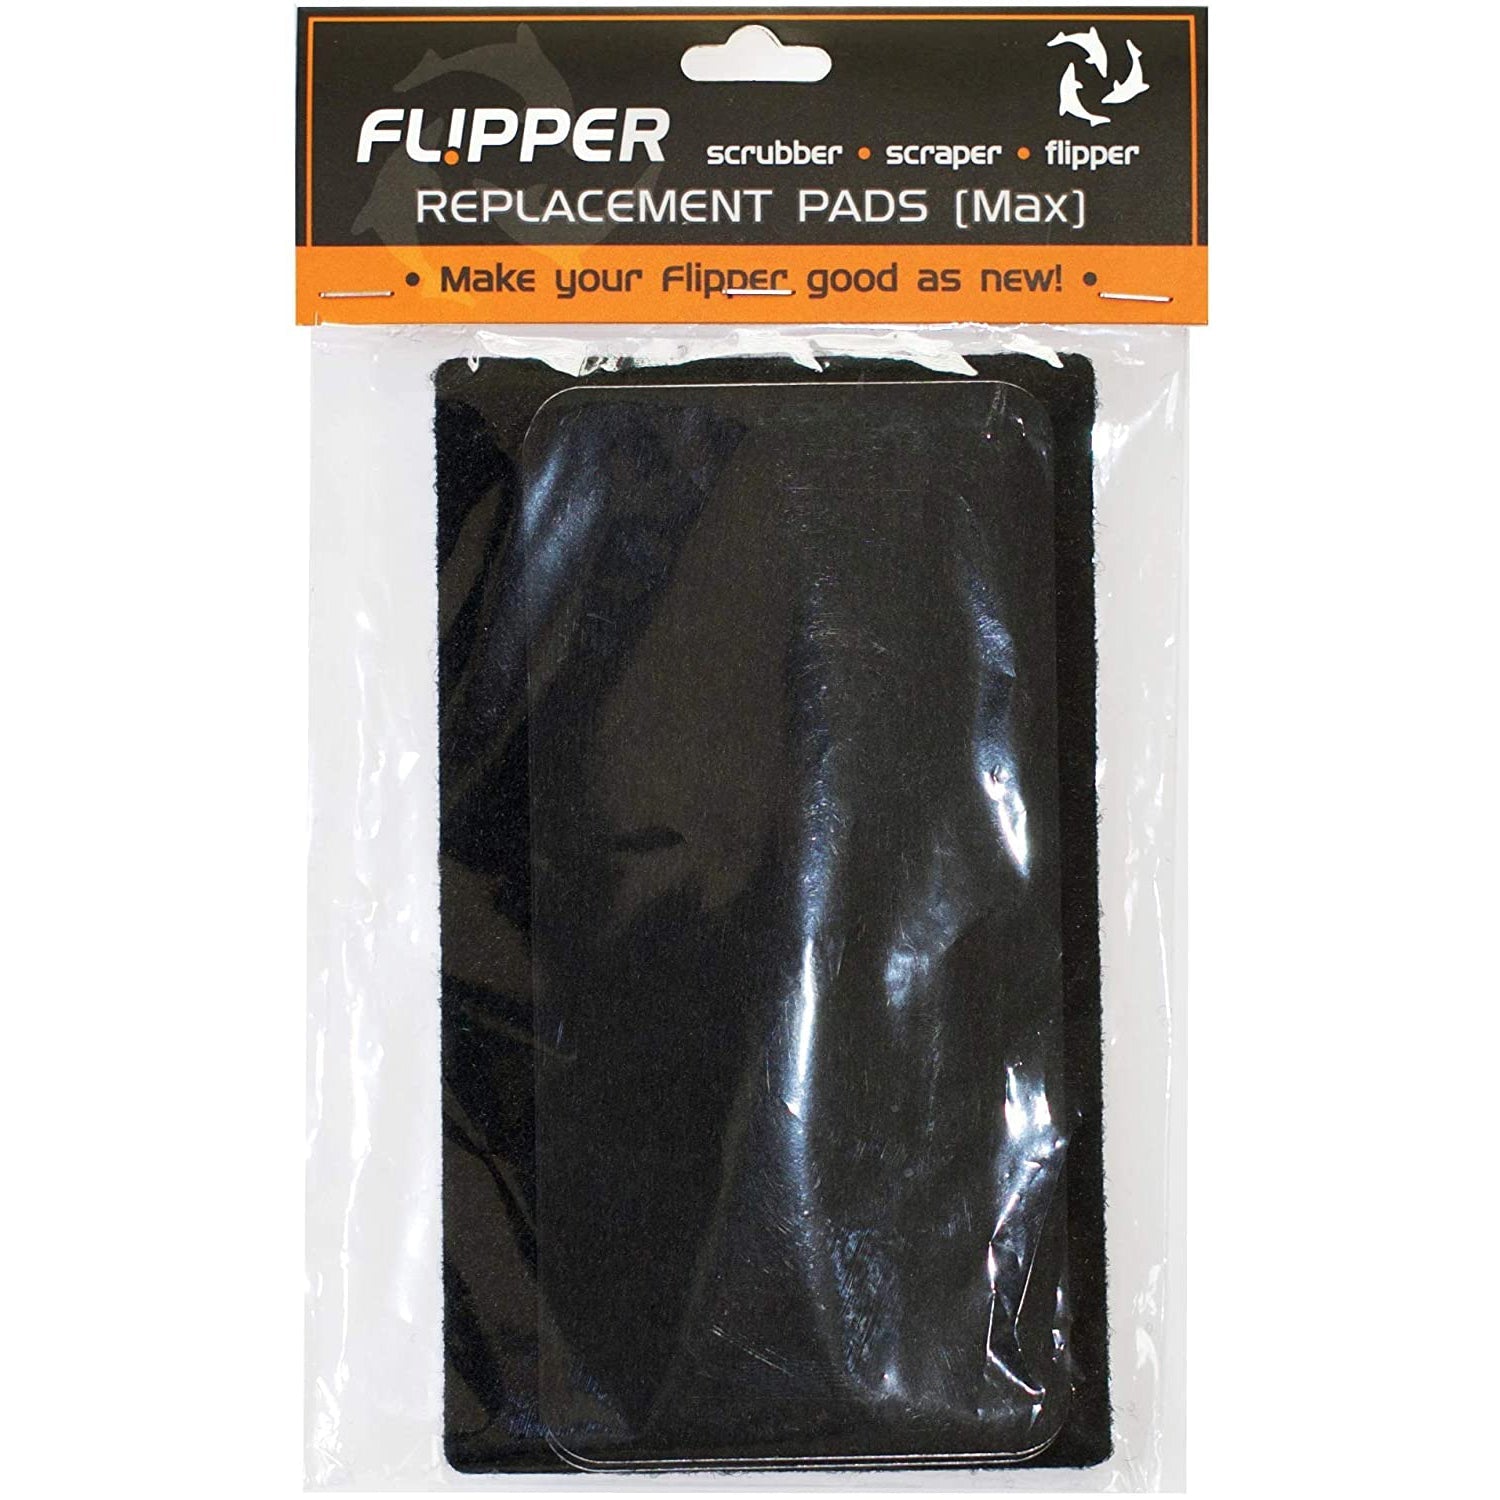 Flipper MAX Maintenance Kit Replacement Pads